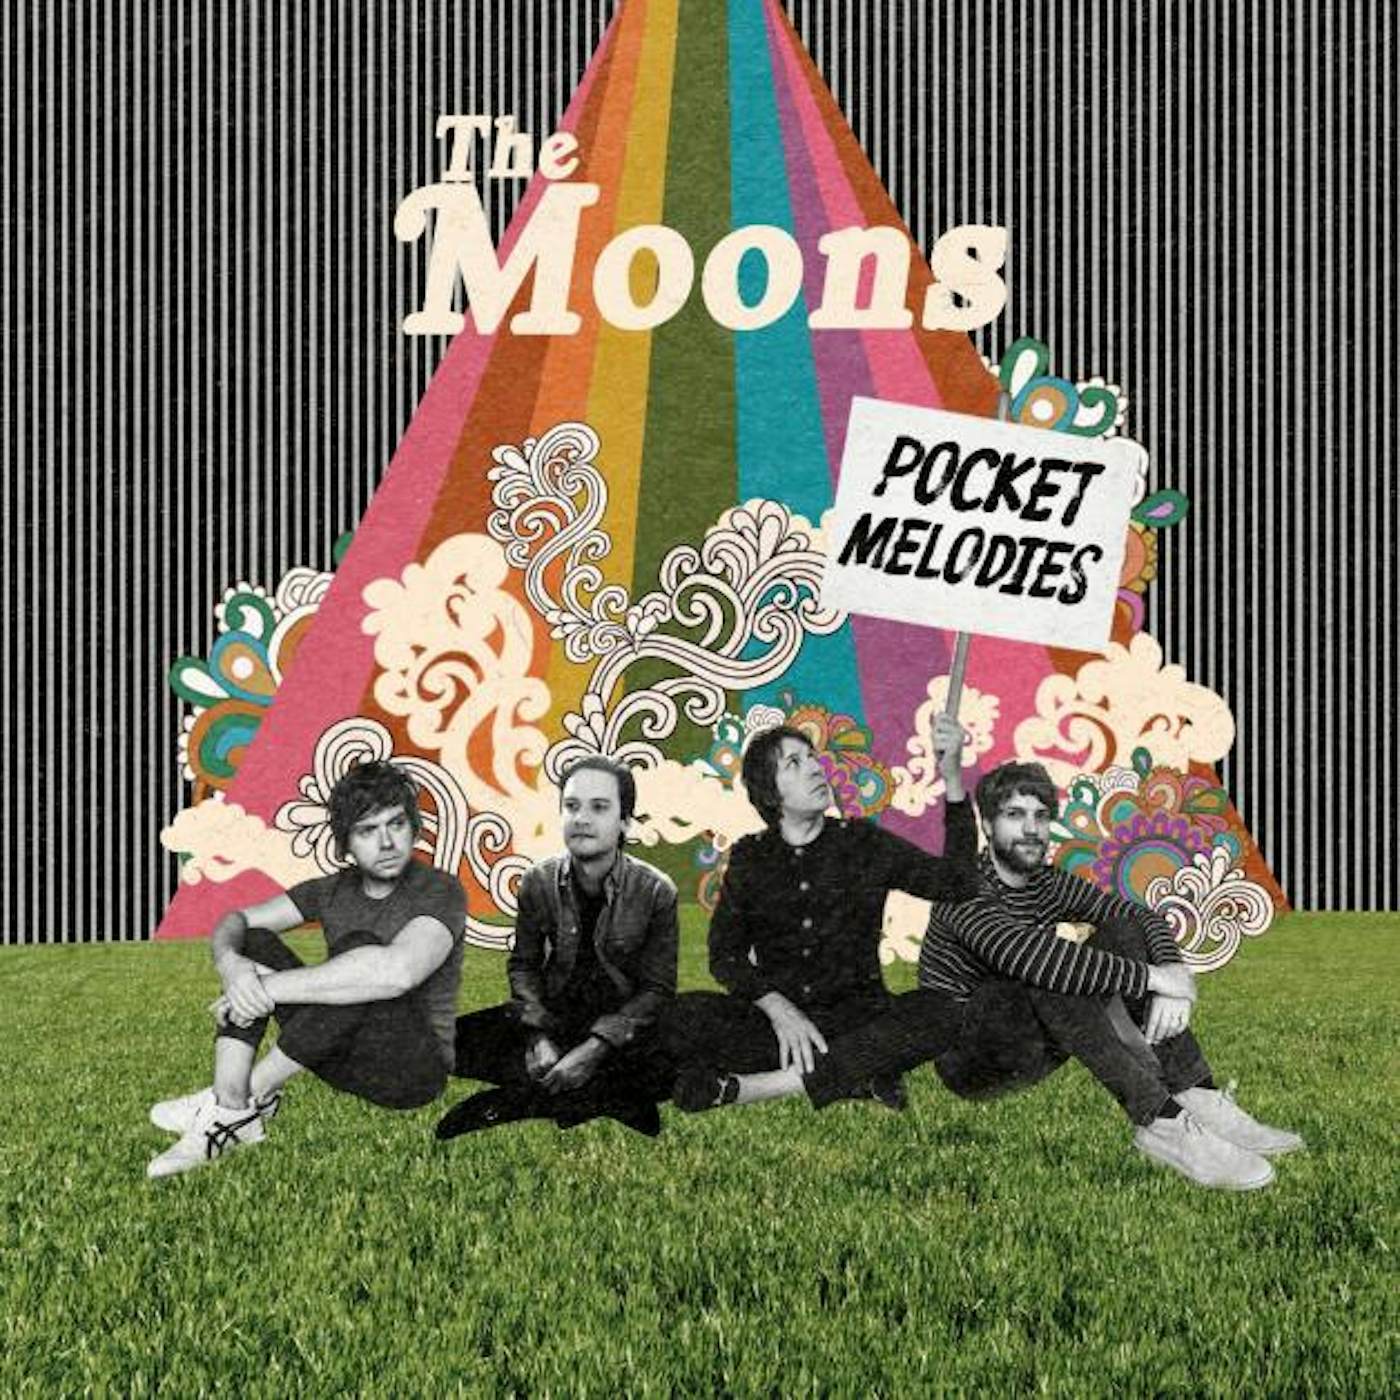 Moons POCKET MELODIES Vinyl Record